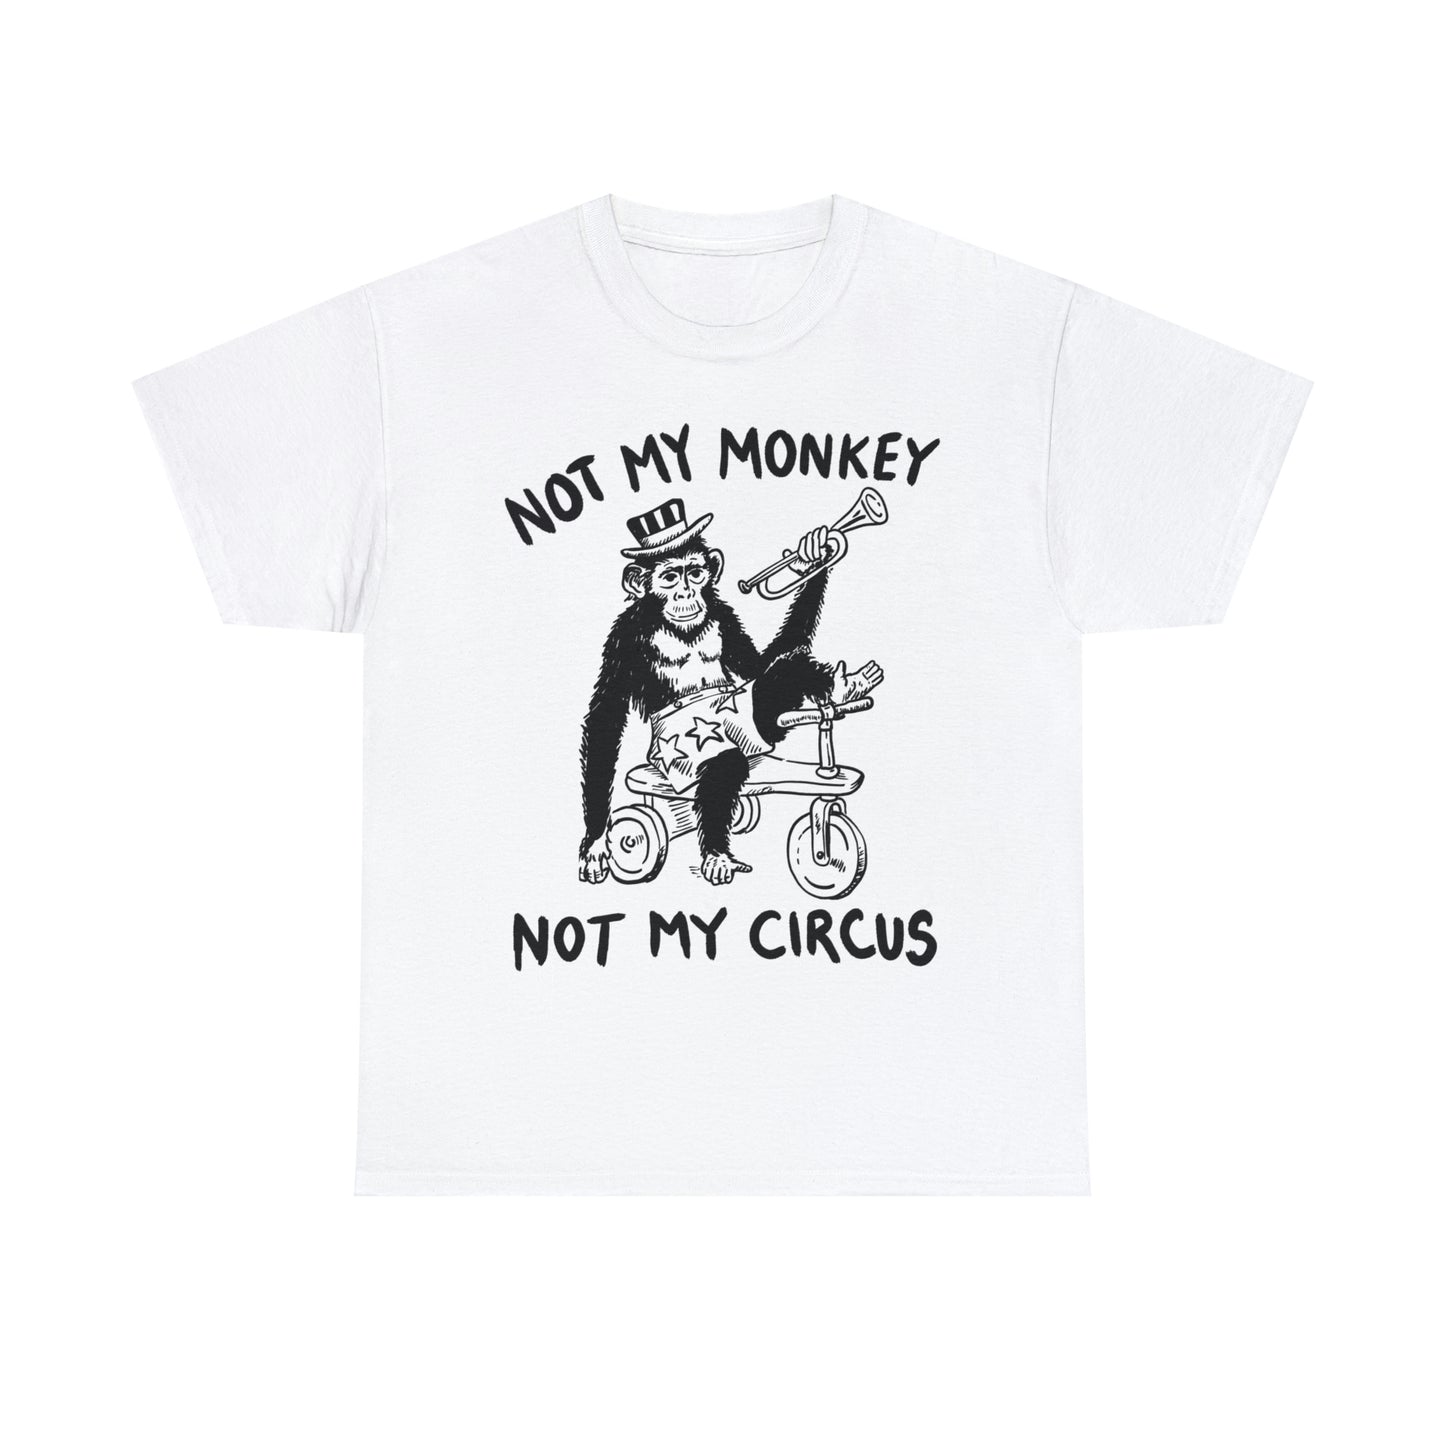 Not My Monkey Not My Circus.